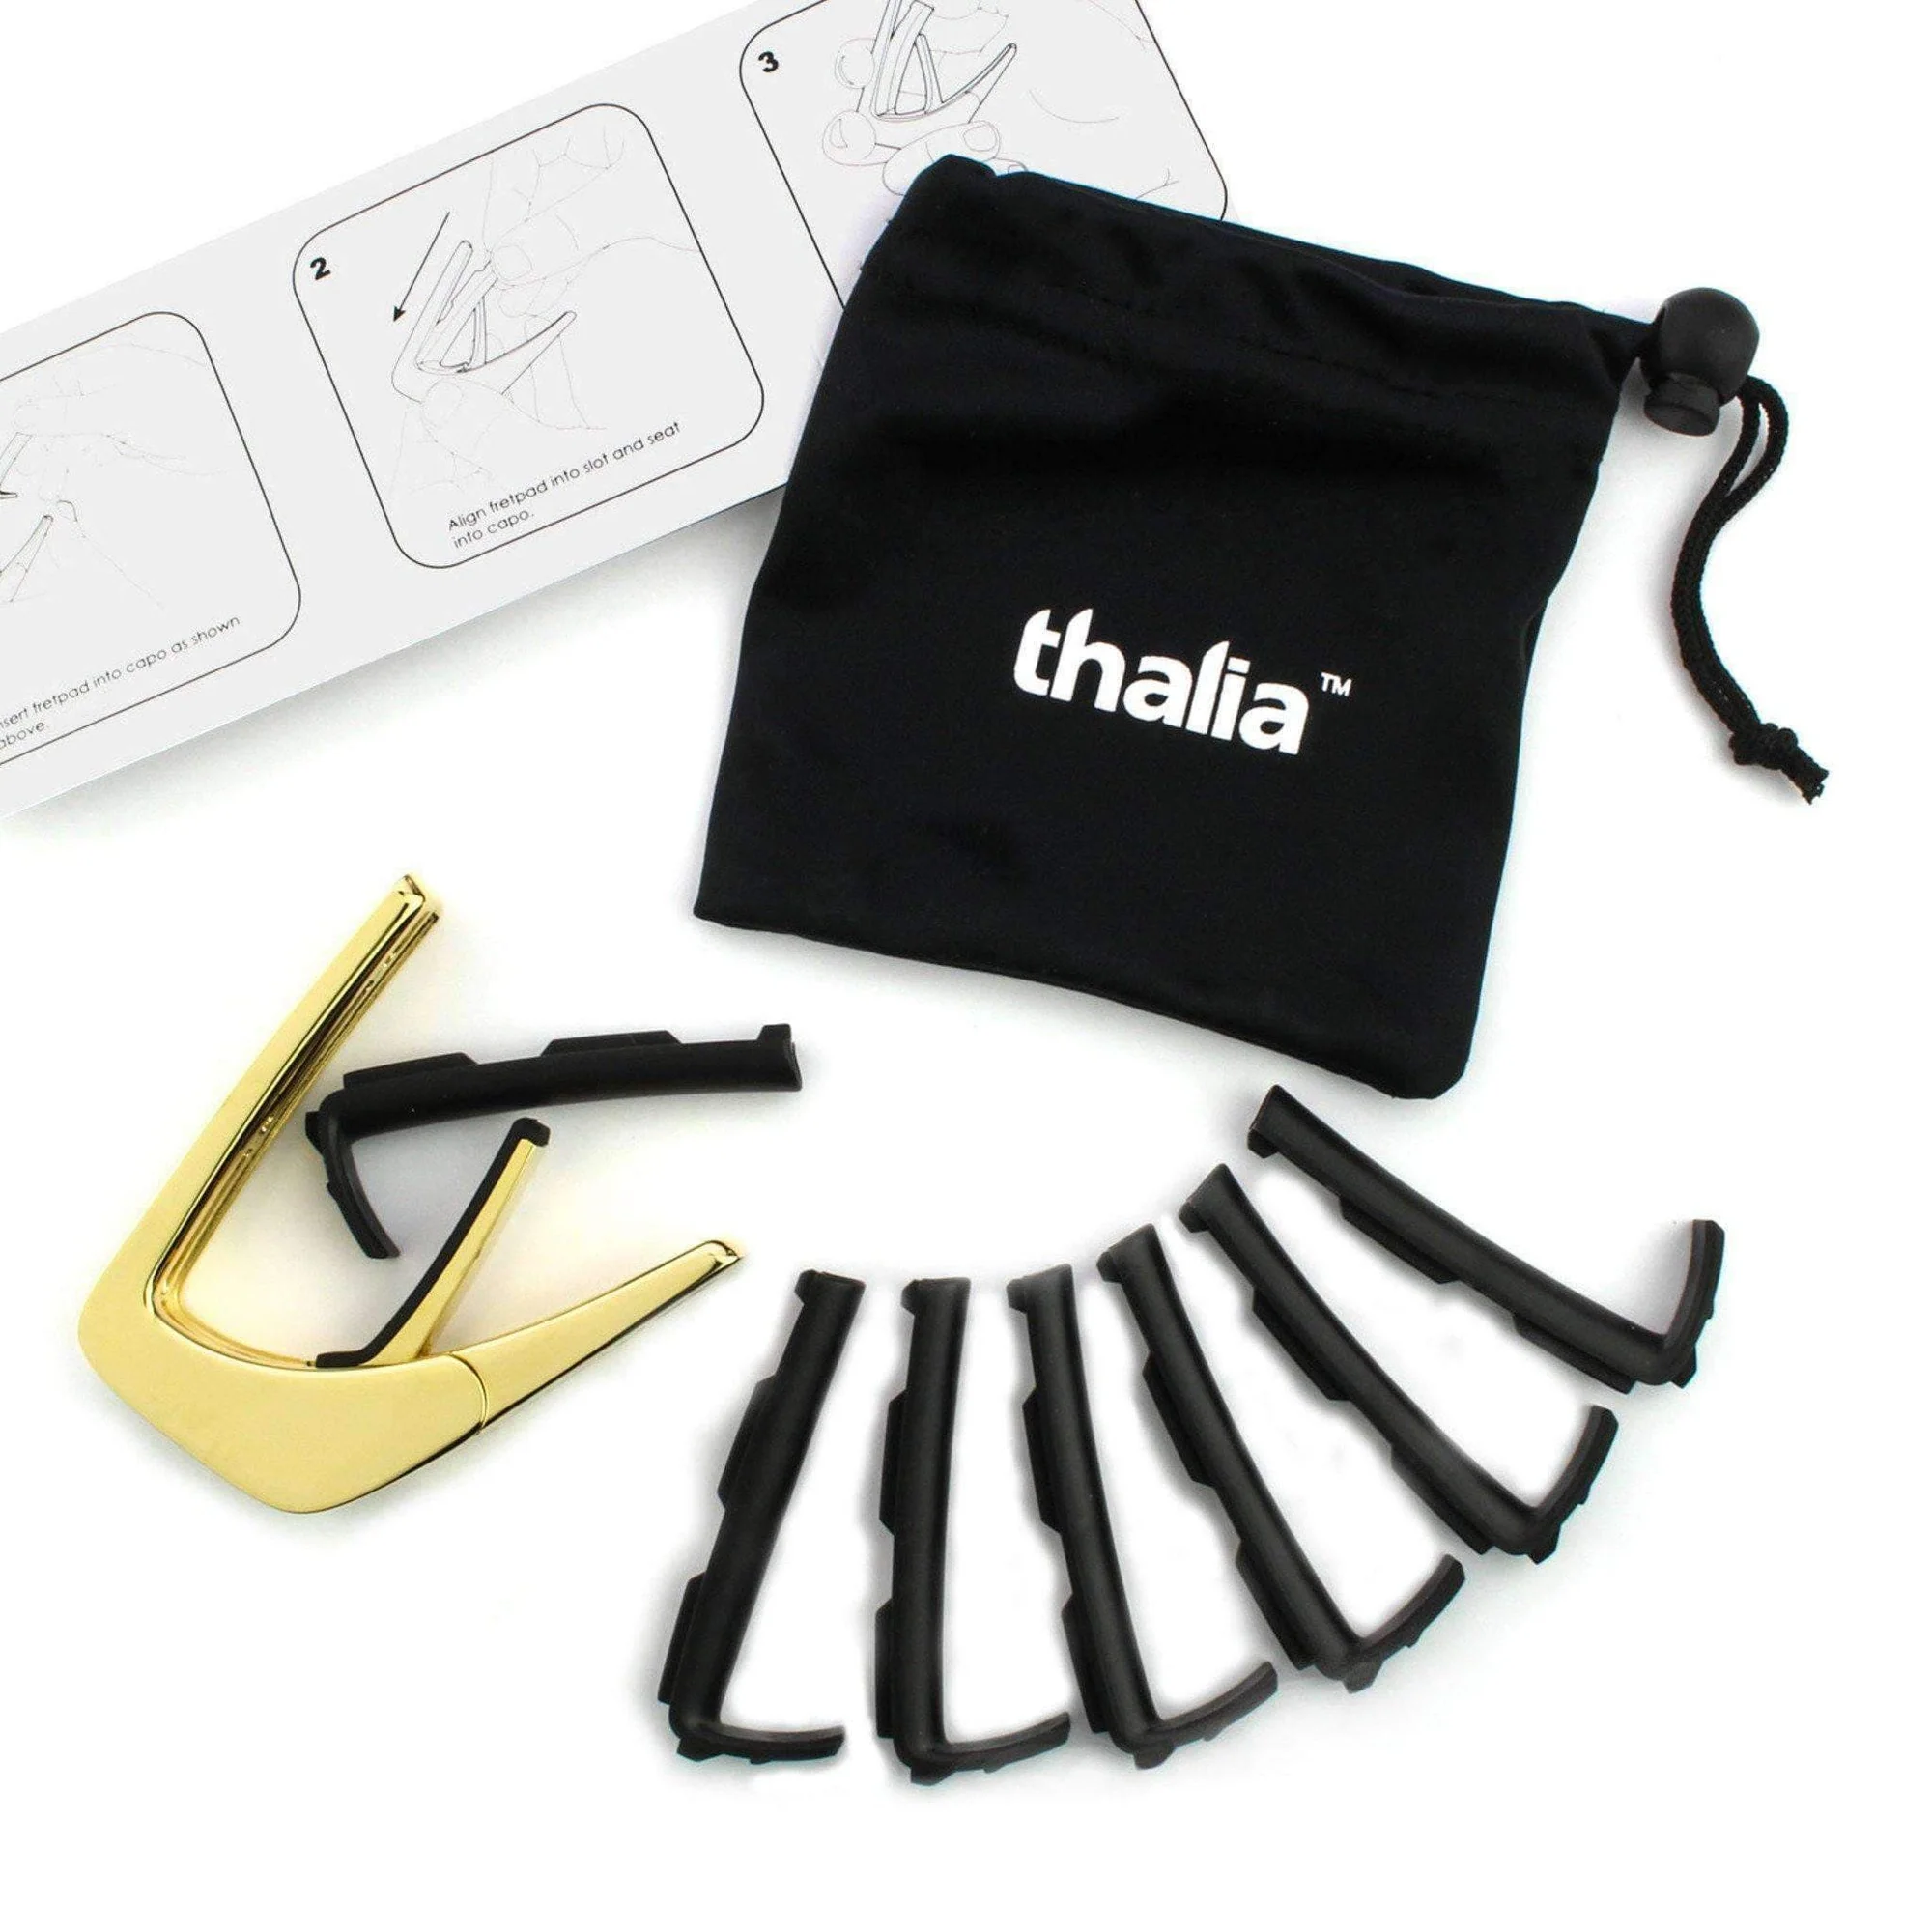 Thalia Capo - 24K Gold - Ebony Inked